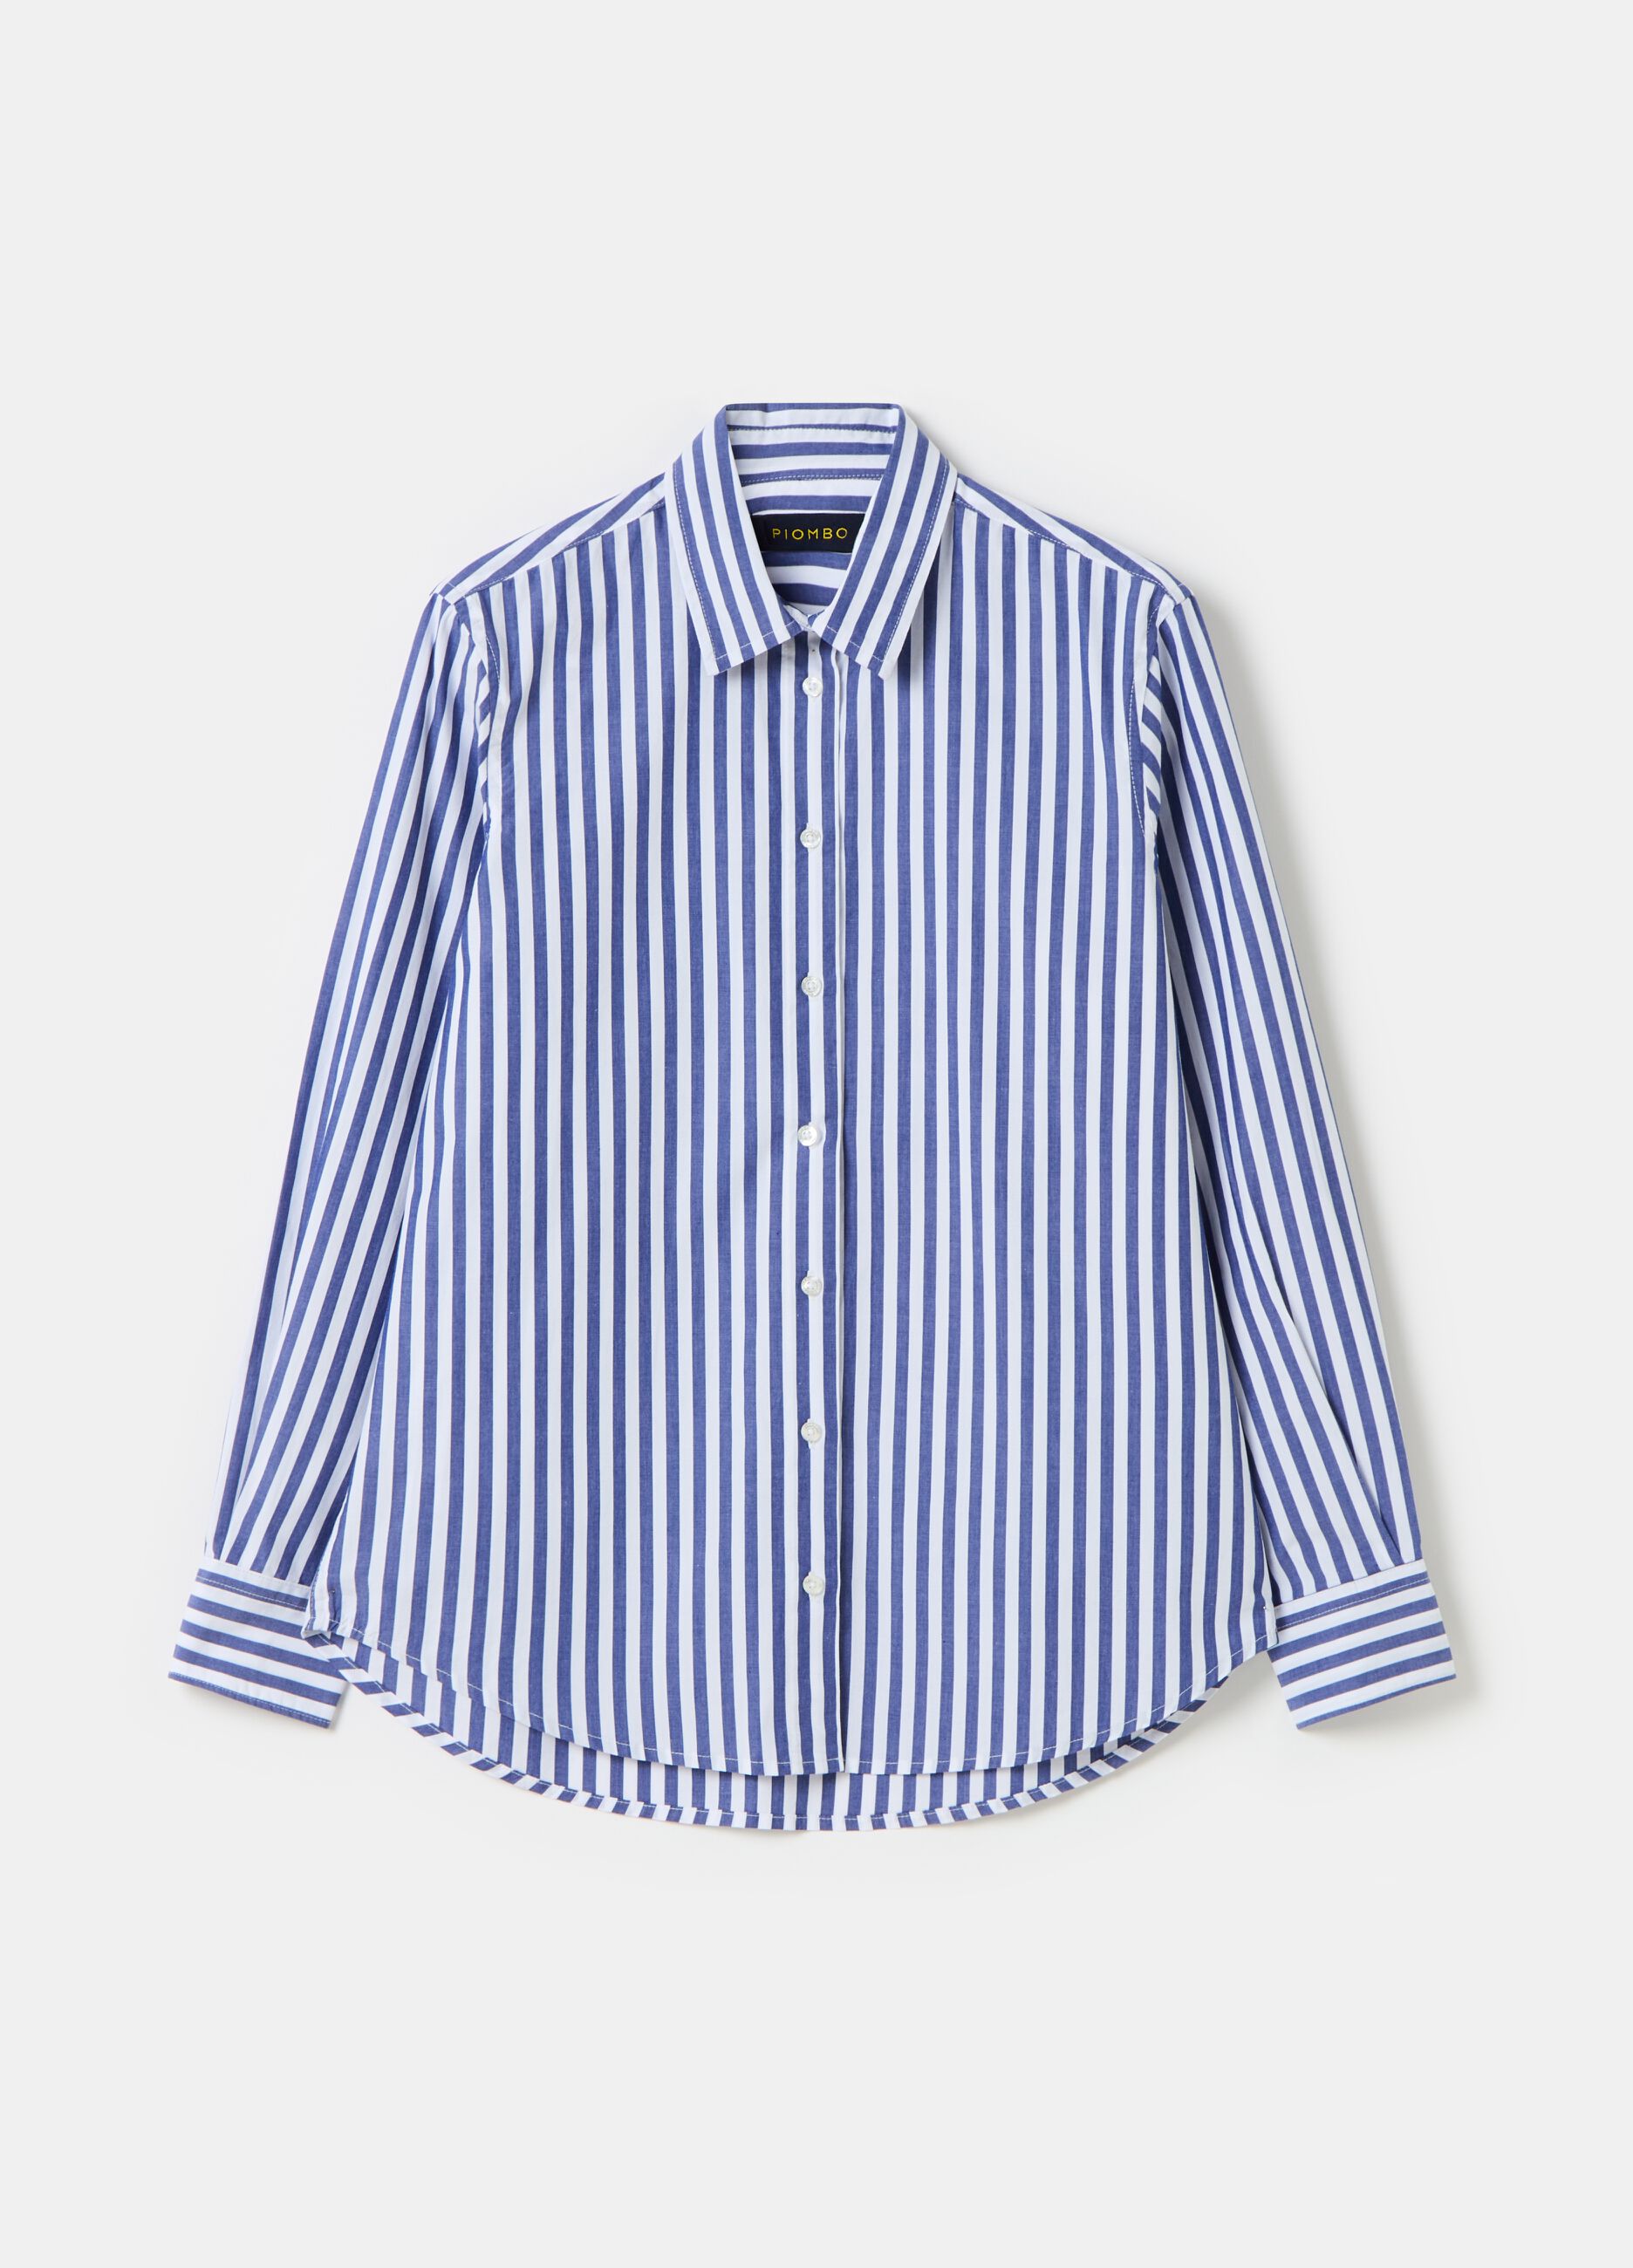 Cotton shirt with regular fit